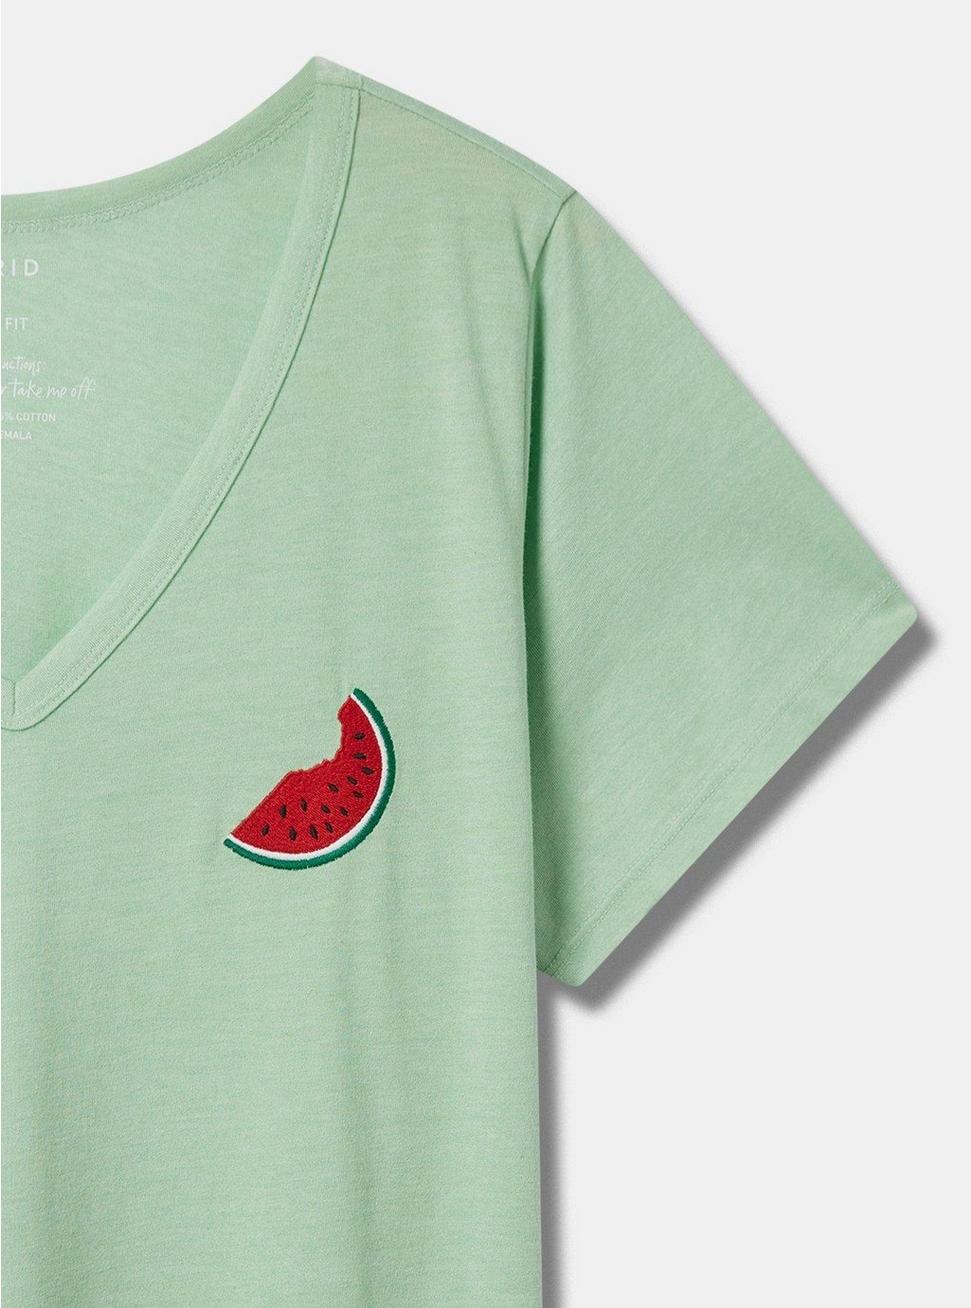 Watermelon Girlfriend Classic Fit V-Neck Tee, HEMLOCK, alternate